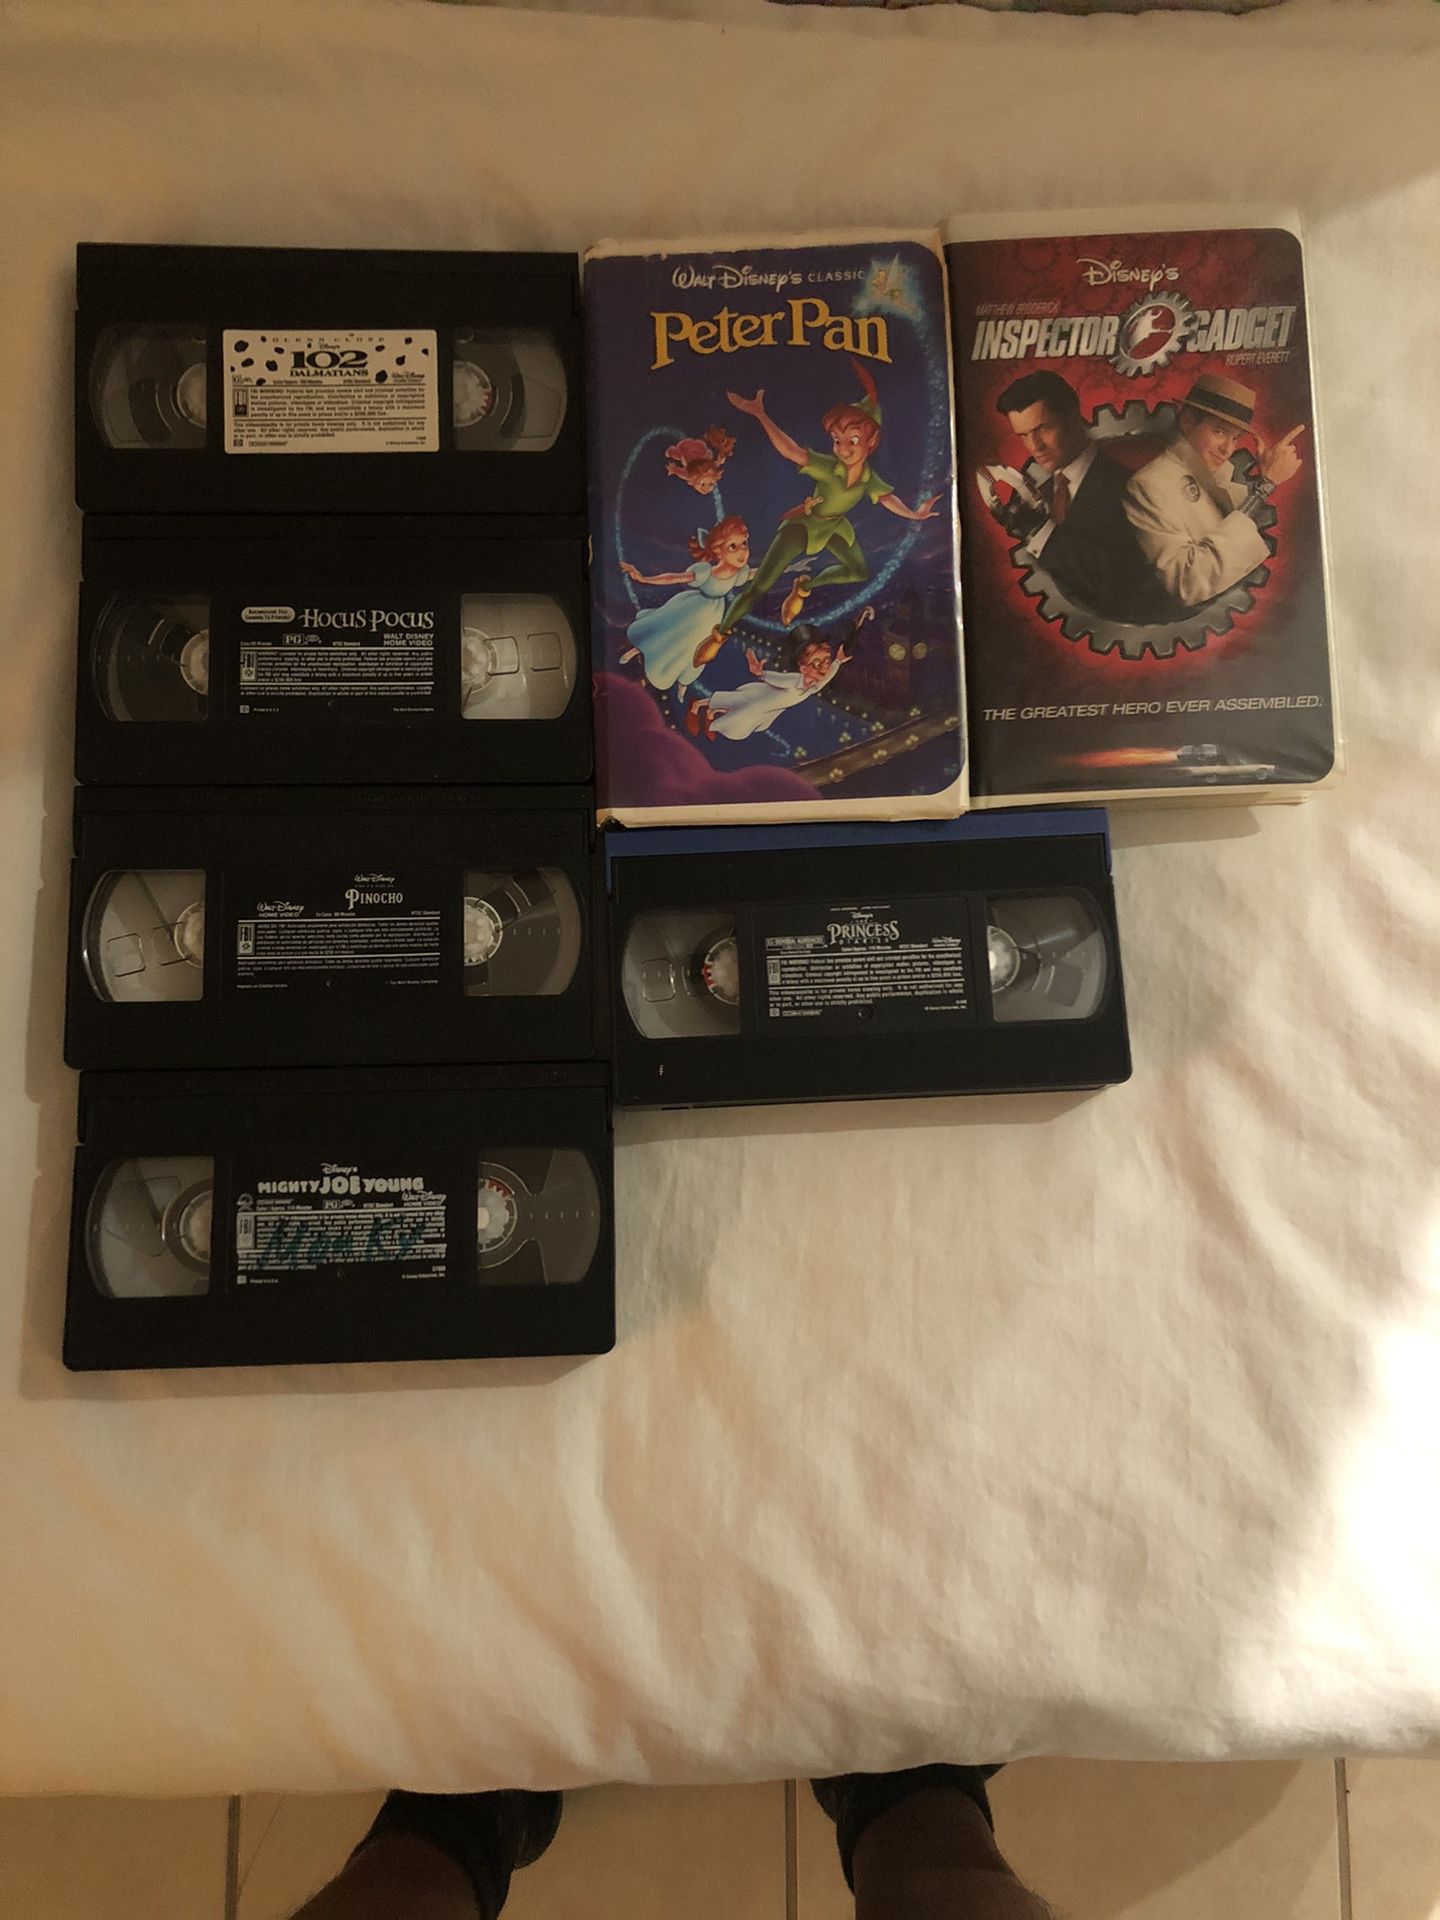 Classic Disney VHS movies